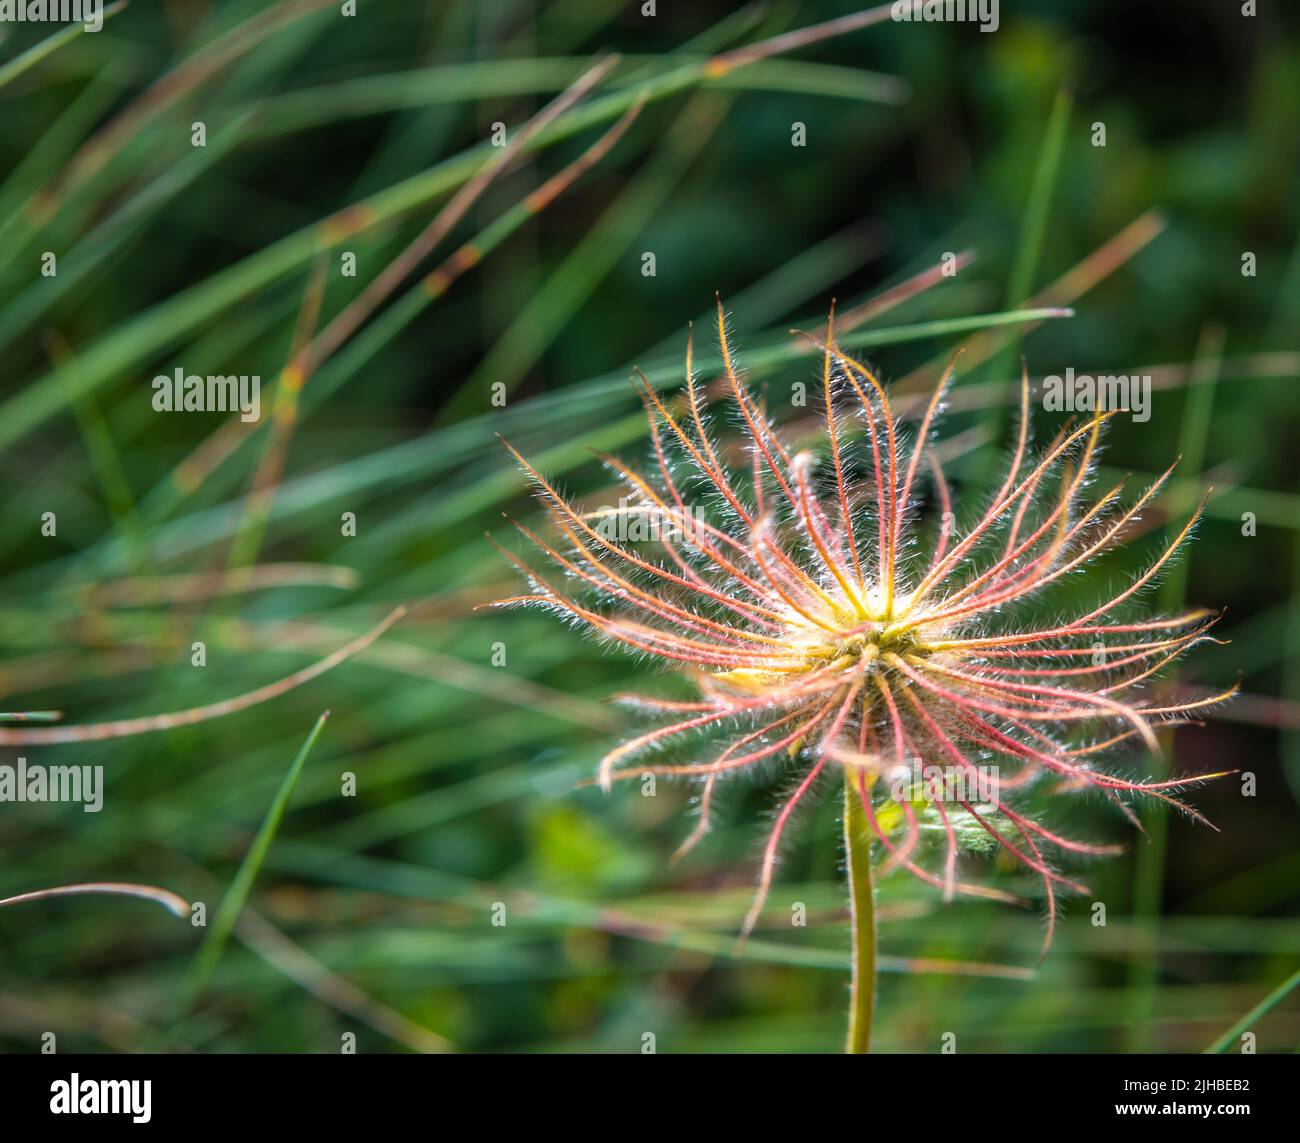 Alpine Pasqueflower (Pulsatilla alpina) with its distinctive silky, hairy seed-heads (achenes) Stock Photo